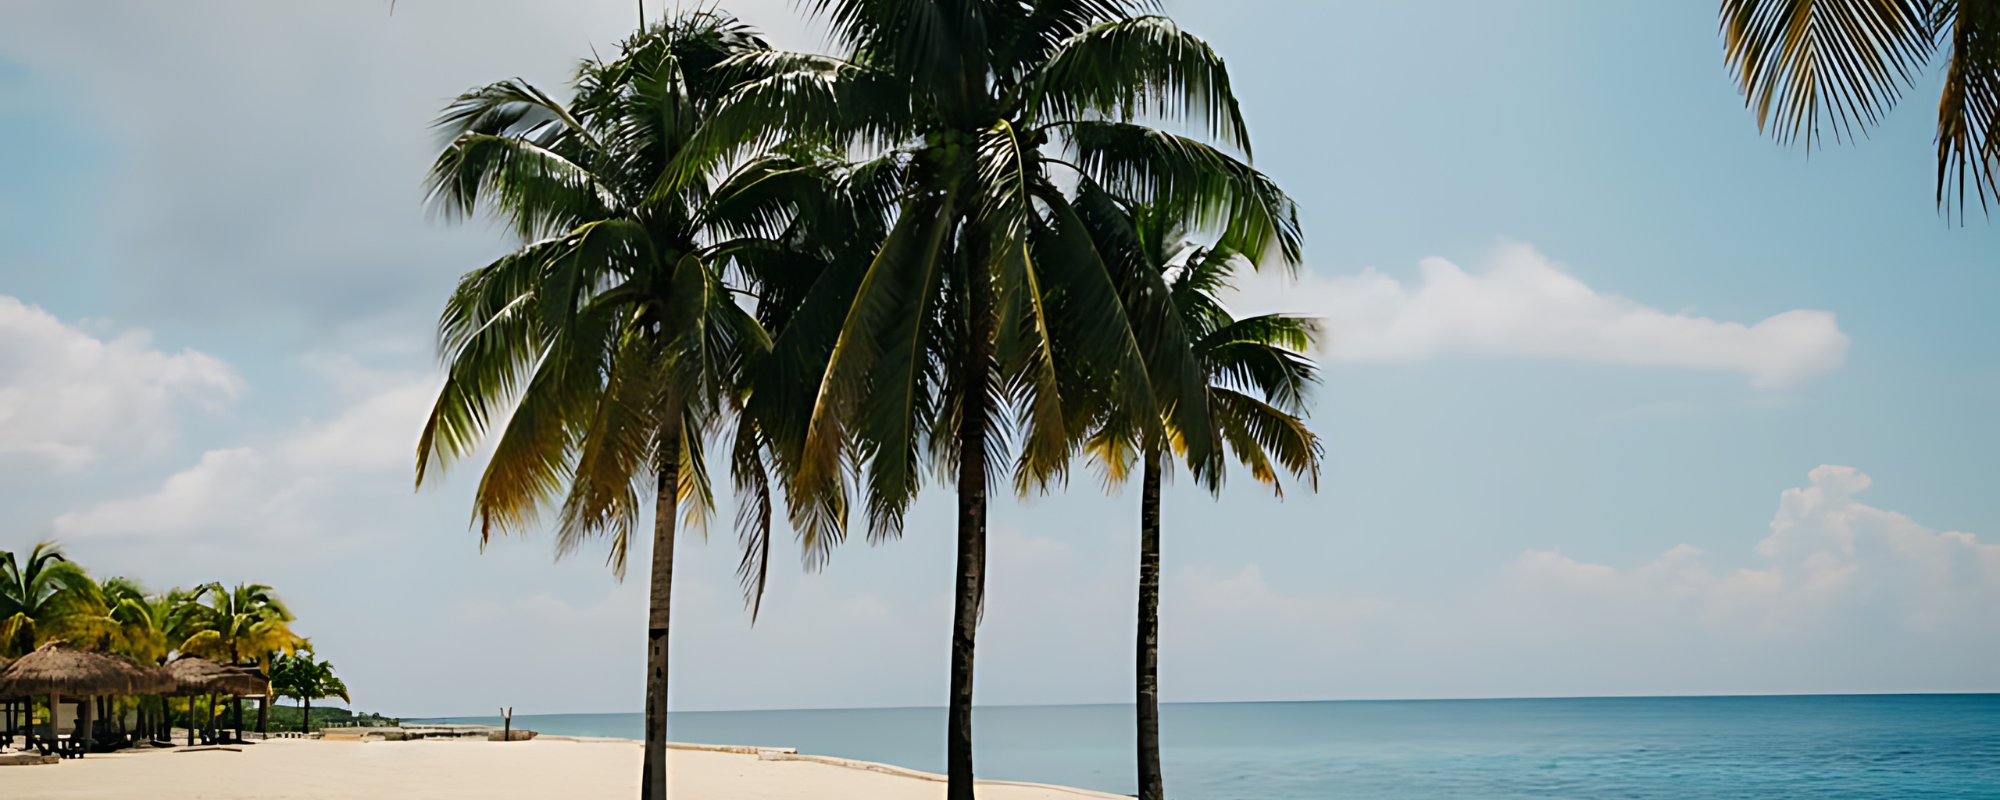 Eco-friendly beachwear, resort wear, and surf clothing by Tropical Seas Clothing